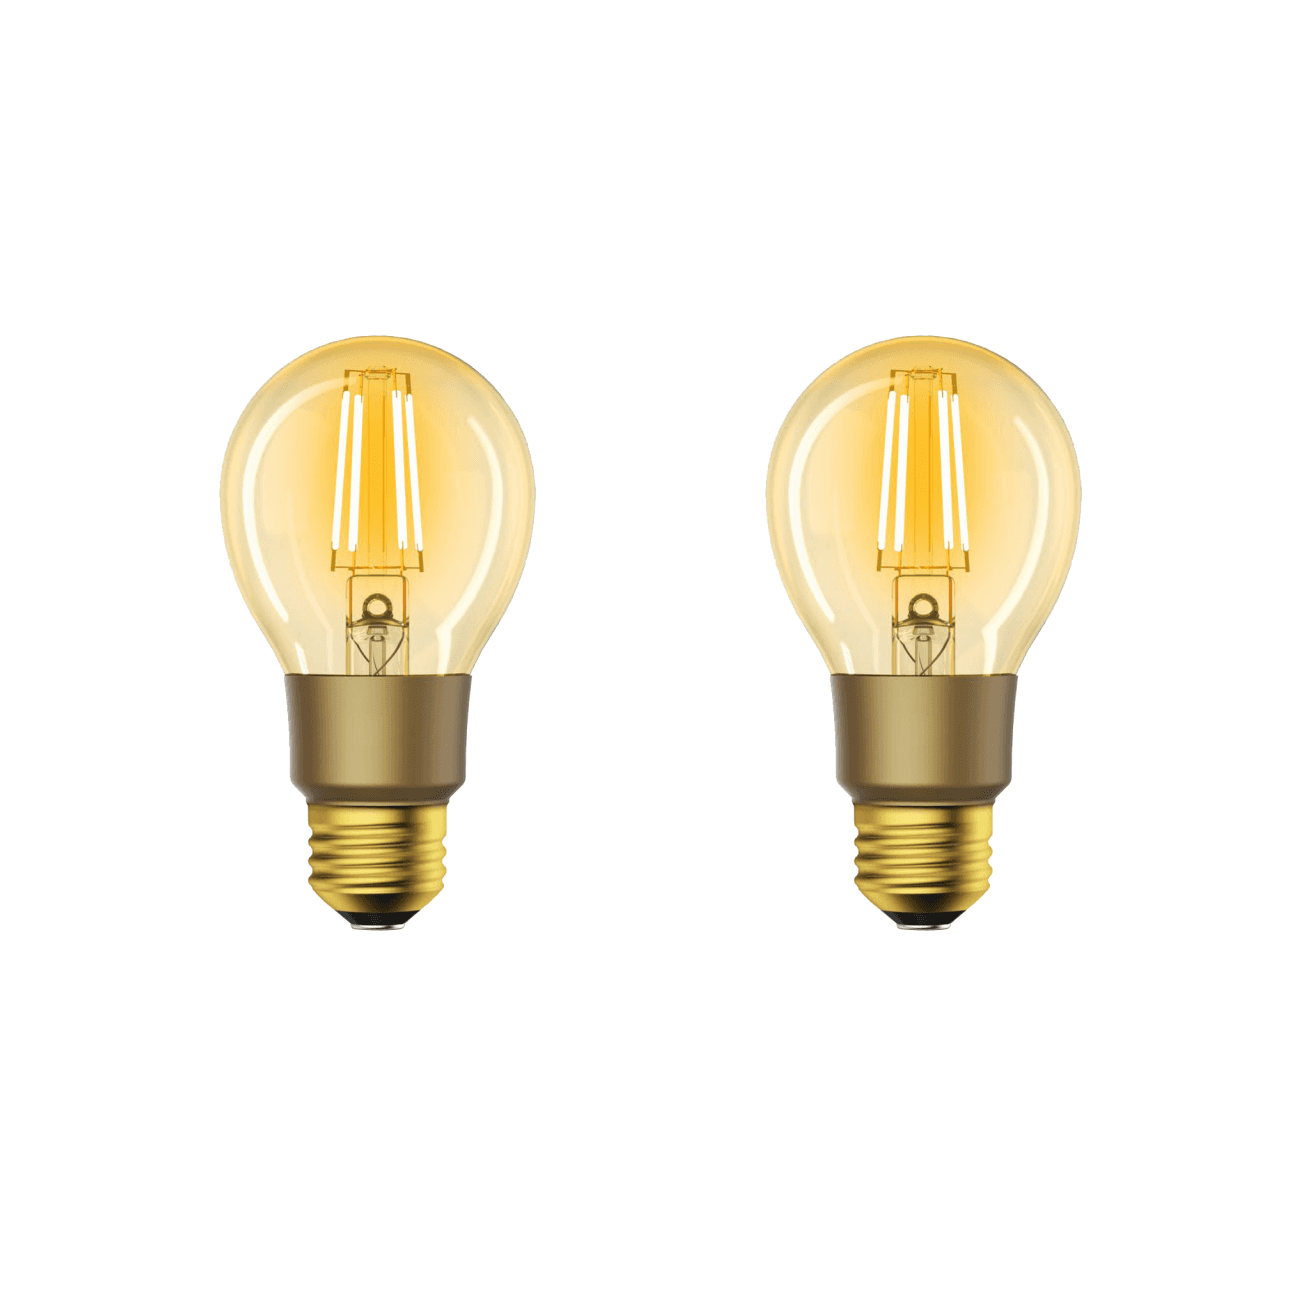 Woox Smart Filament E27 lamp 2-pack